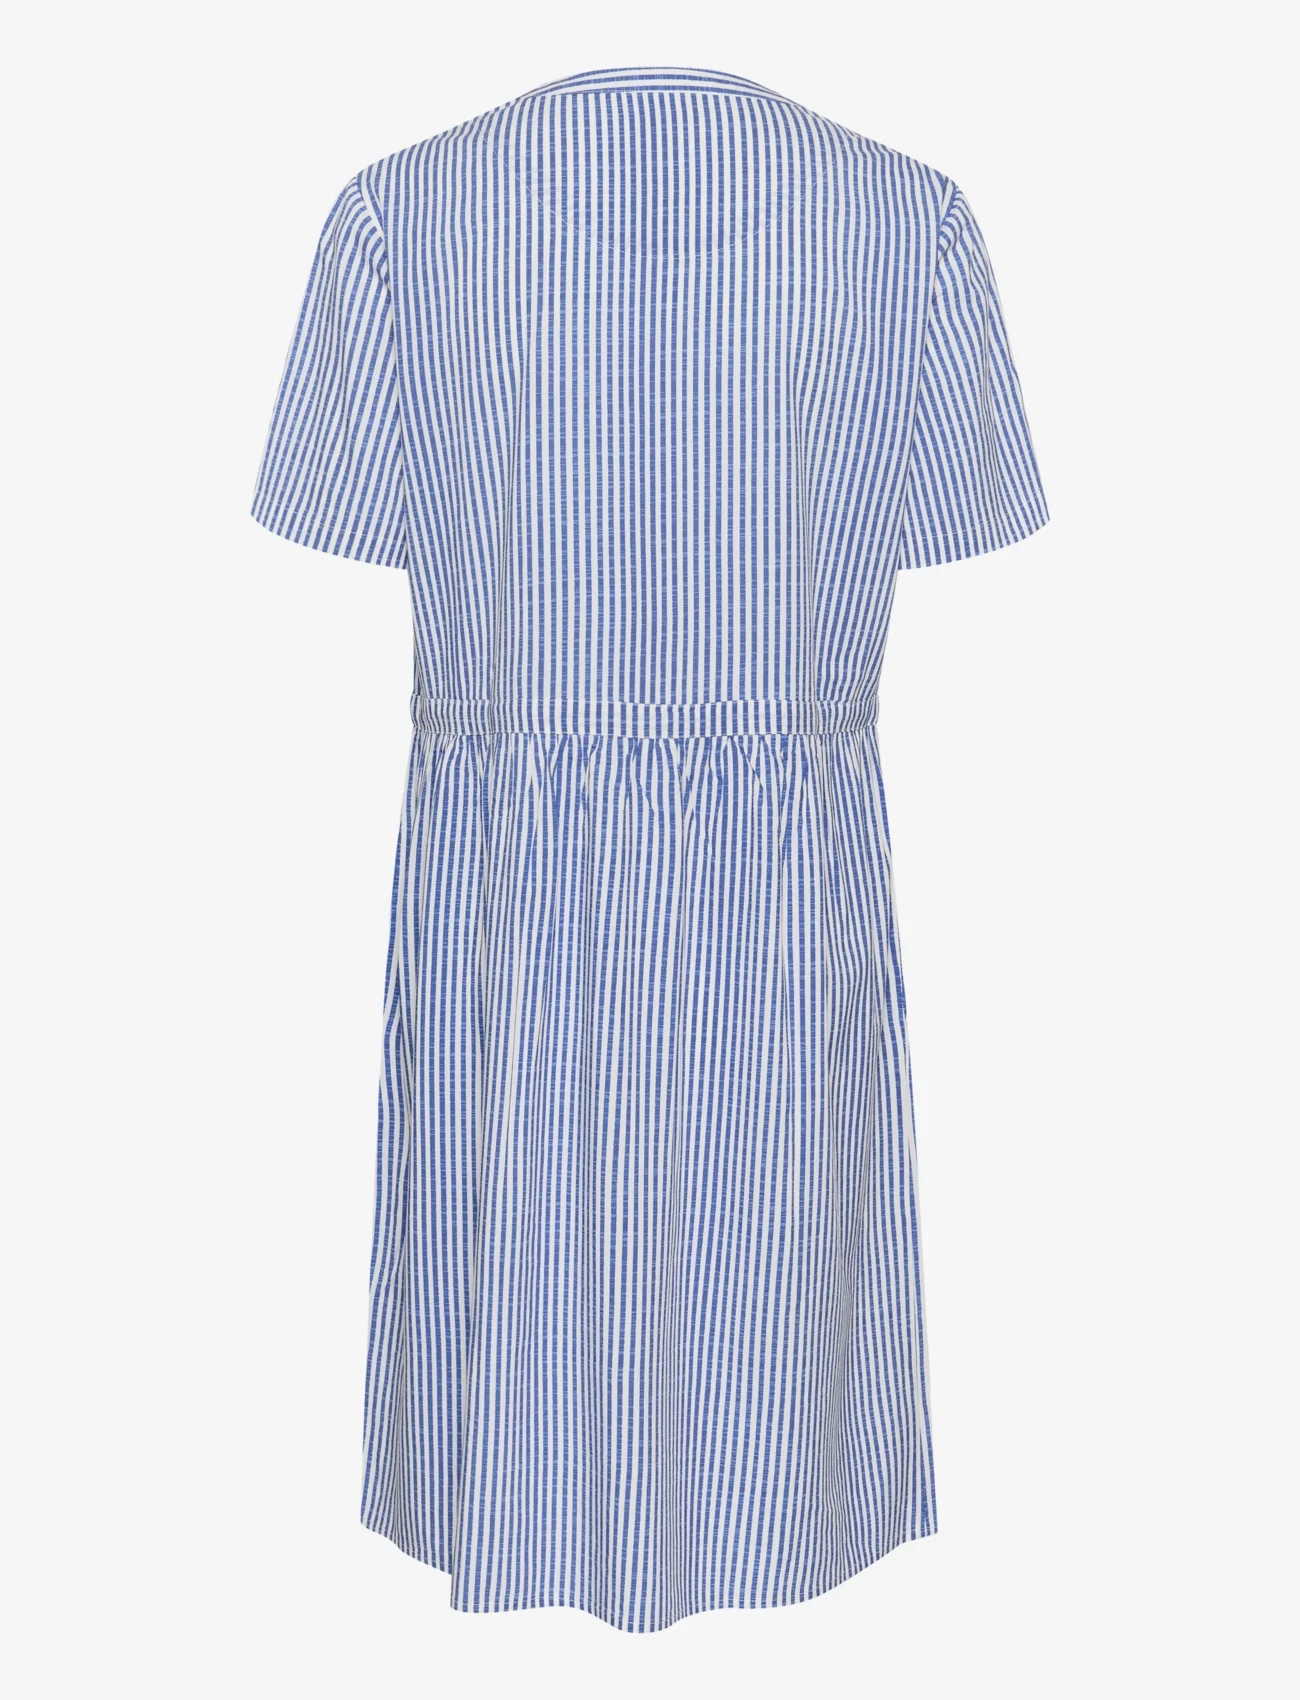 Cream - CRTiah Dress - Zally Fit - summer dresses - blue milkboy - 1